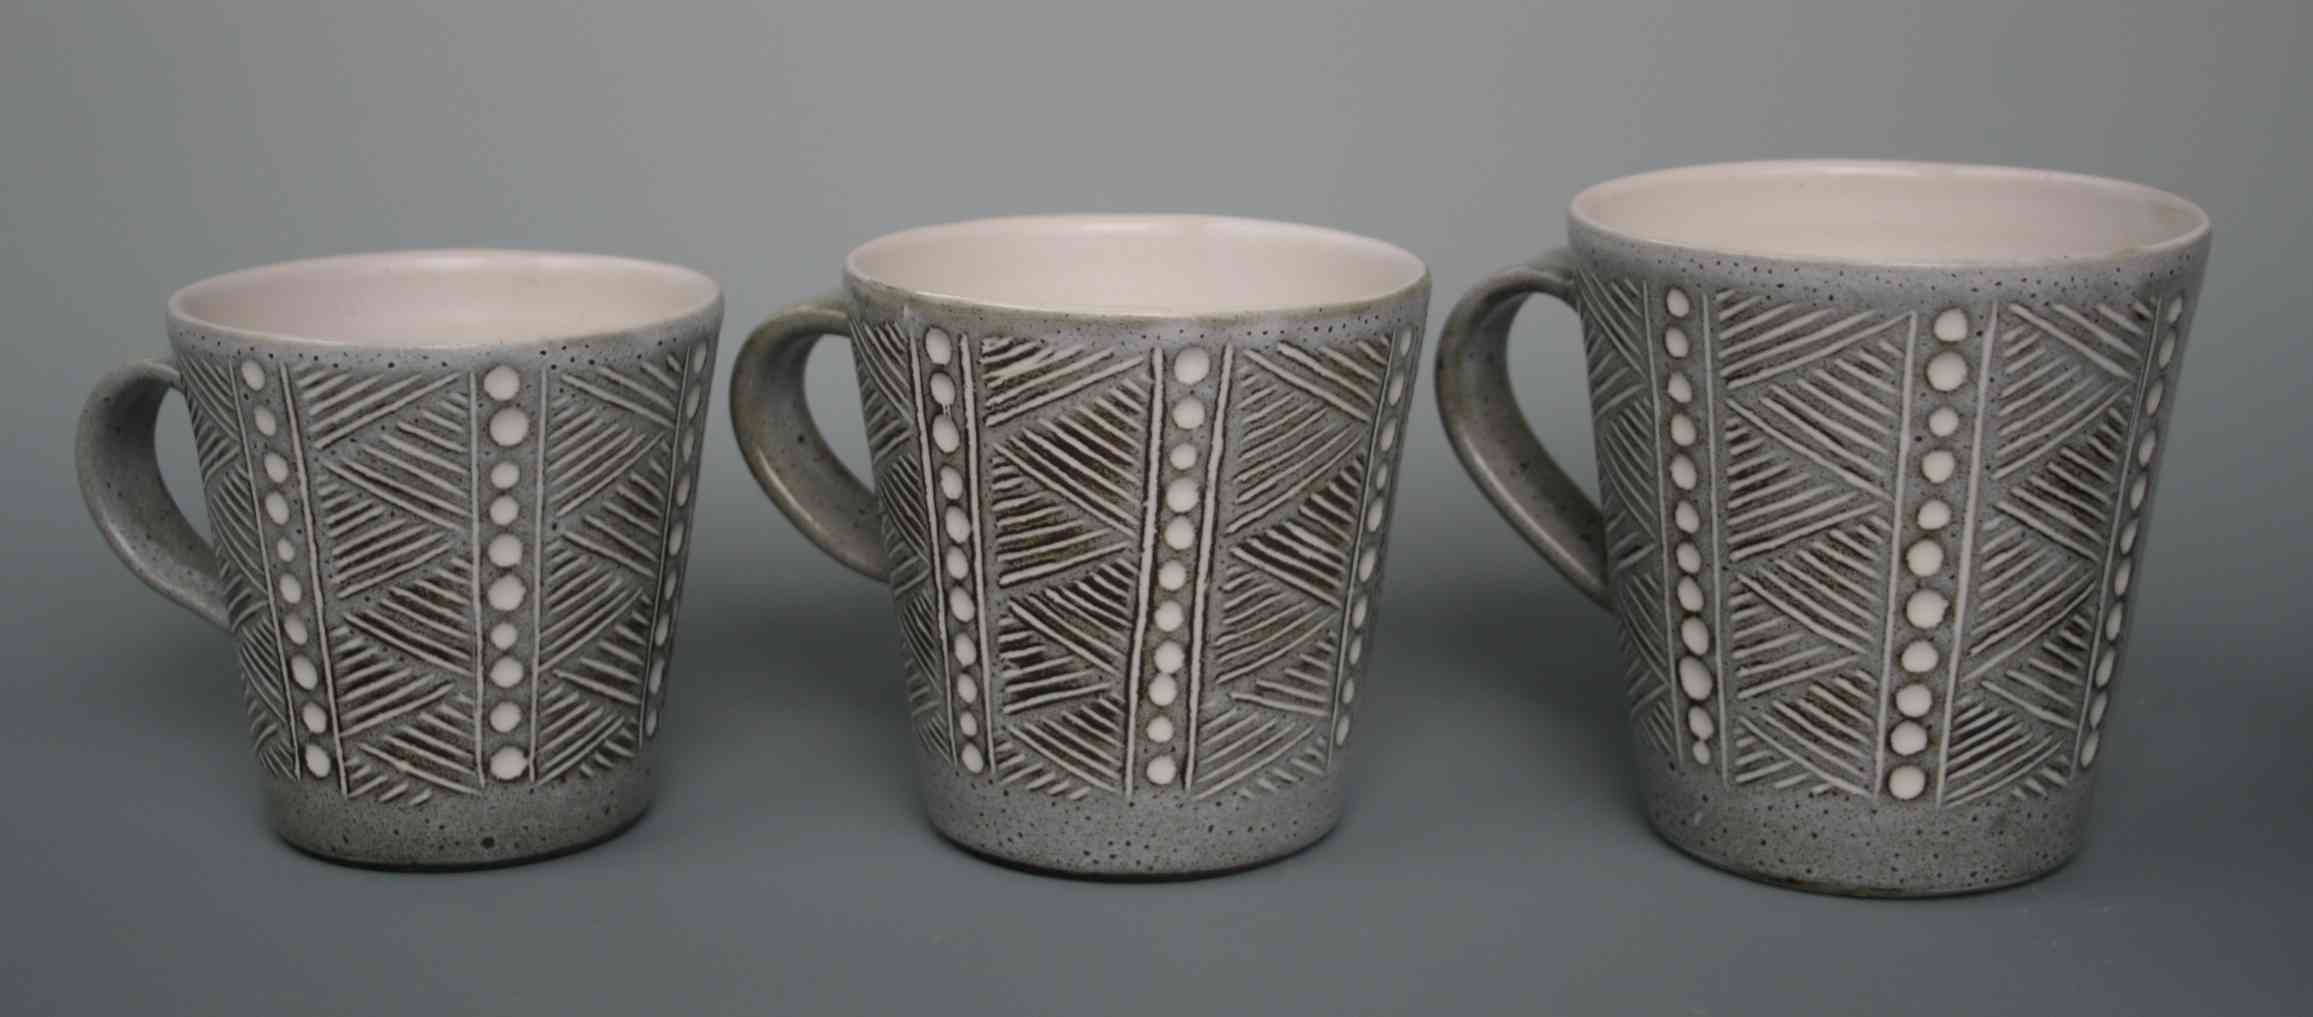 3 x white stoneware mugs with incised black slip and white glaze